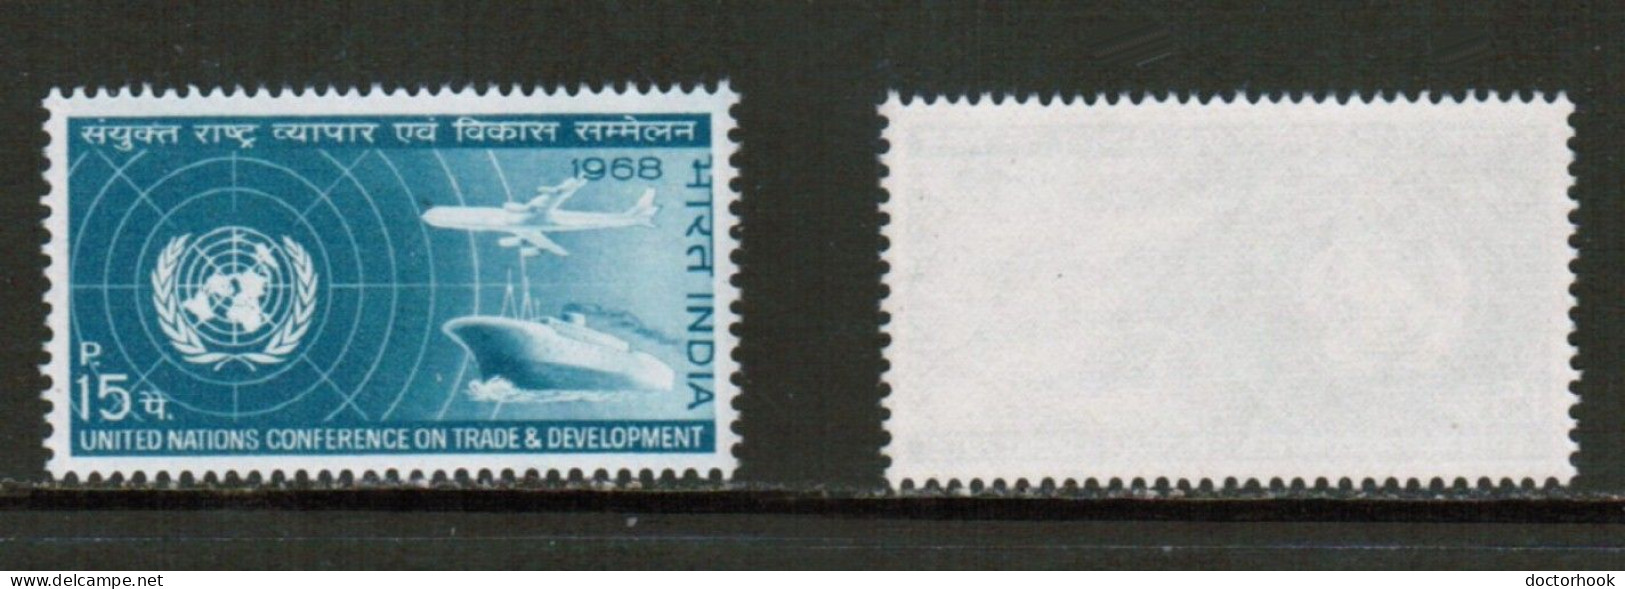 INDIA   Scott # 463** MINT NH (CONDITION AS PER SCAN) (Stamp Scan # 919-9) - Ongebruikt